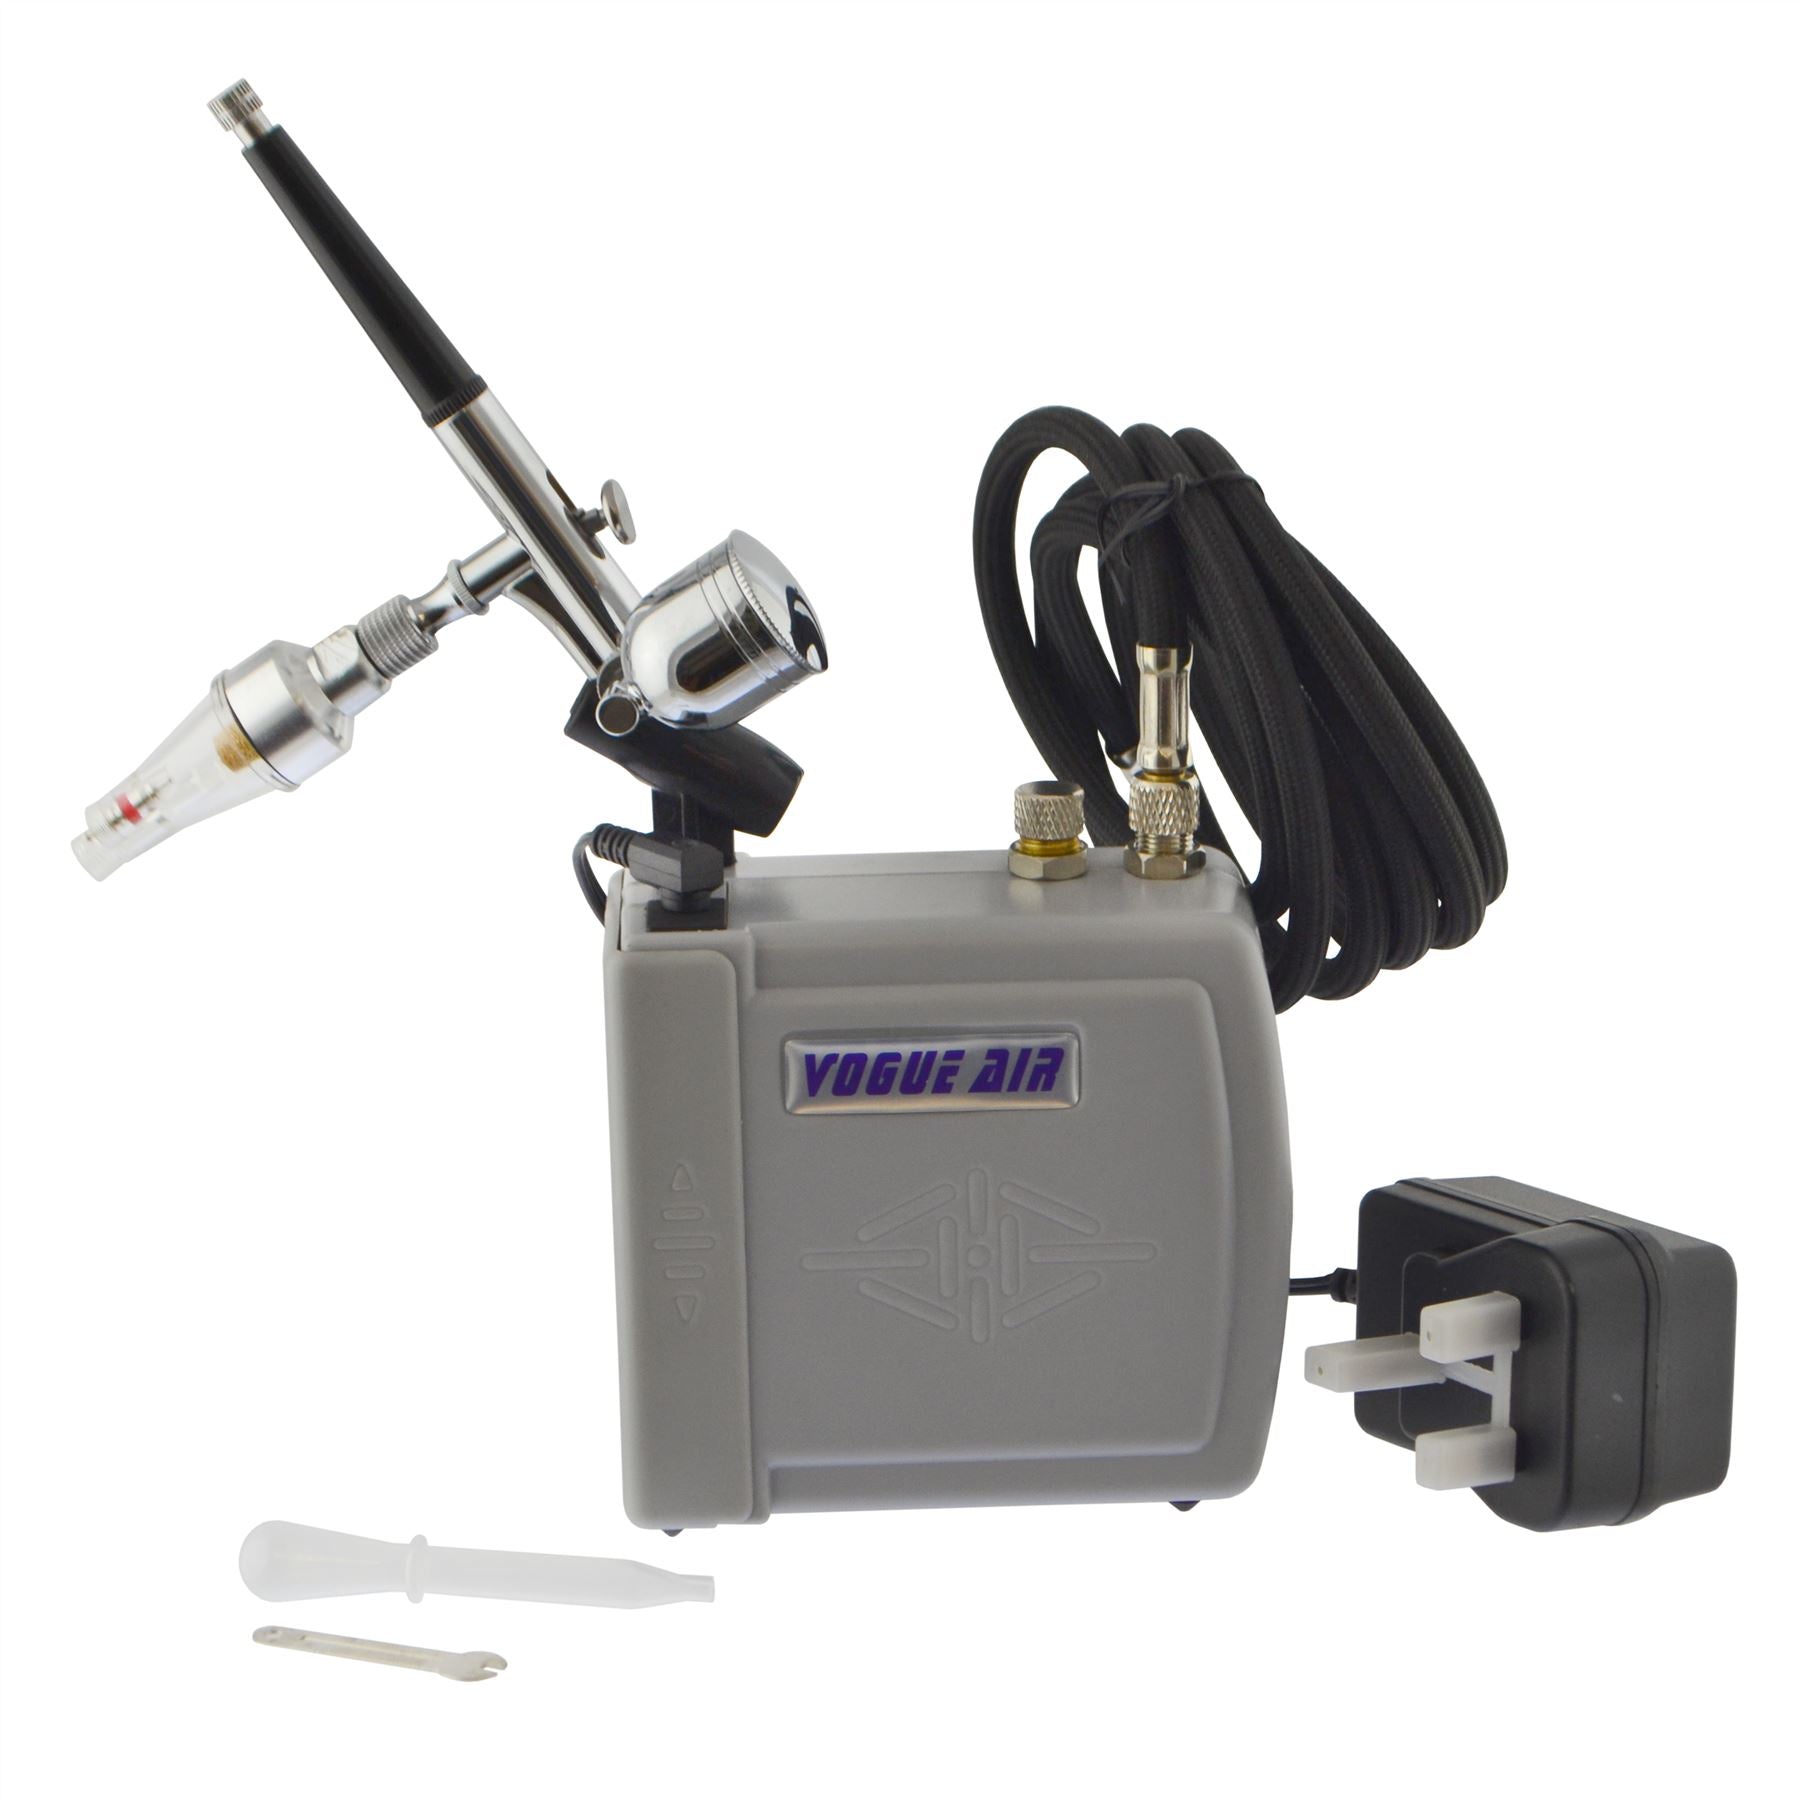 Portable Mini Air brush And Compressor Spray Paint Gun Airbrush Kit